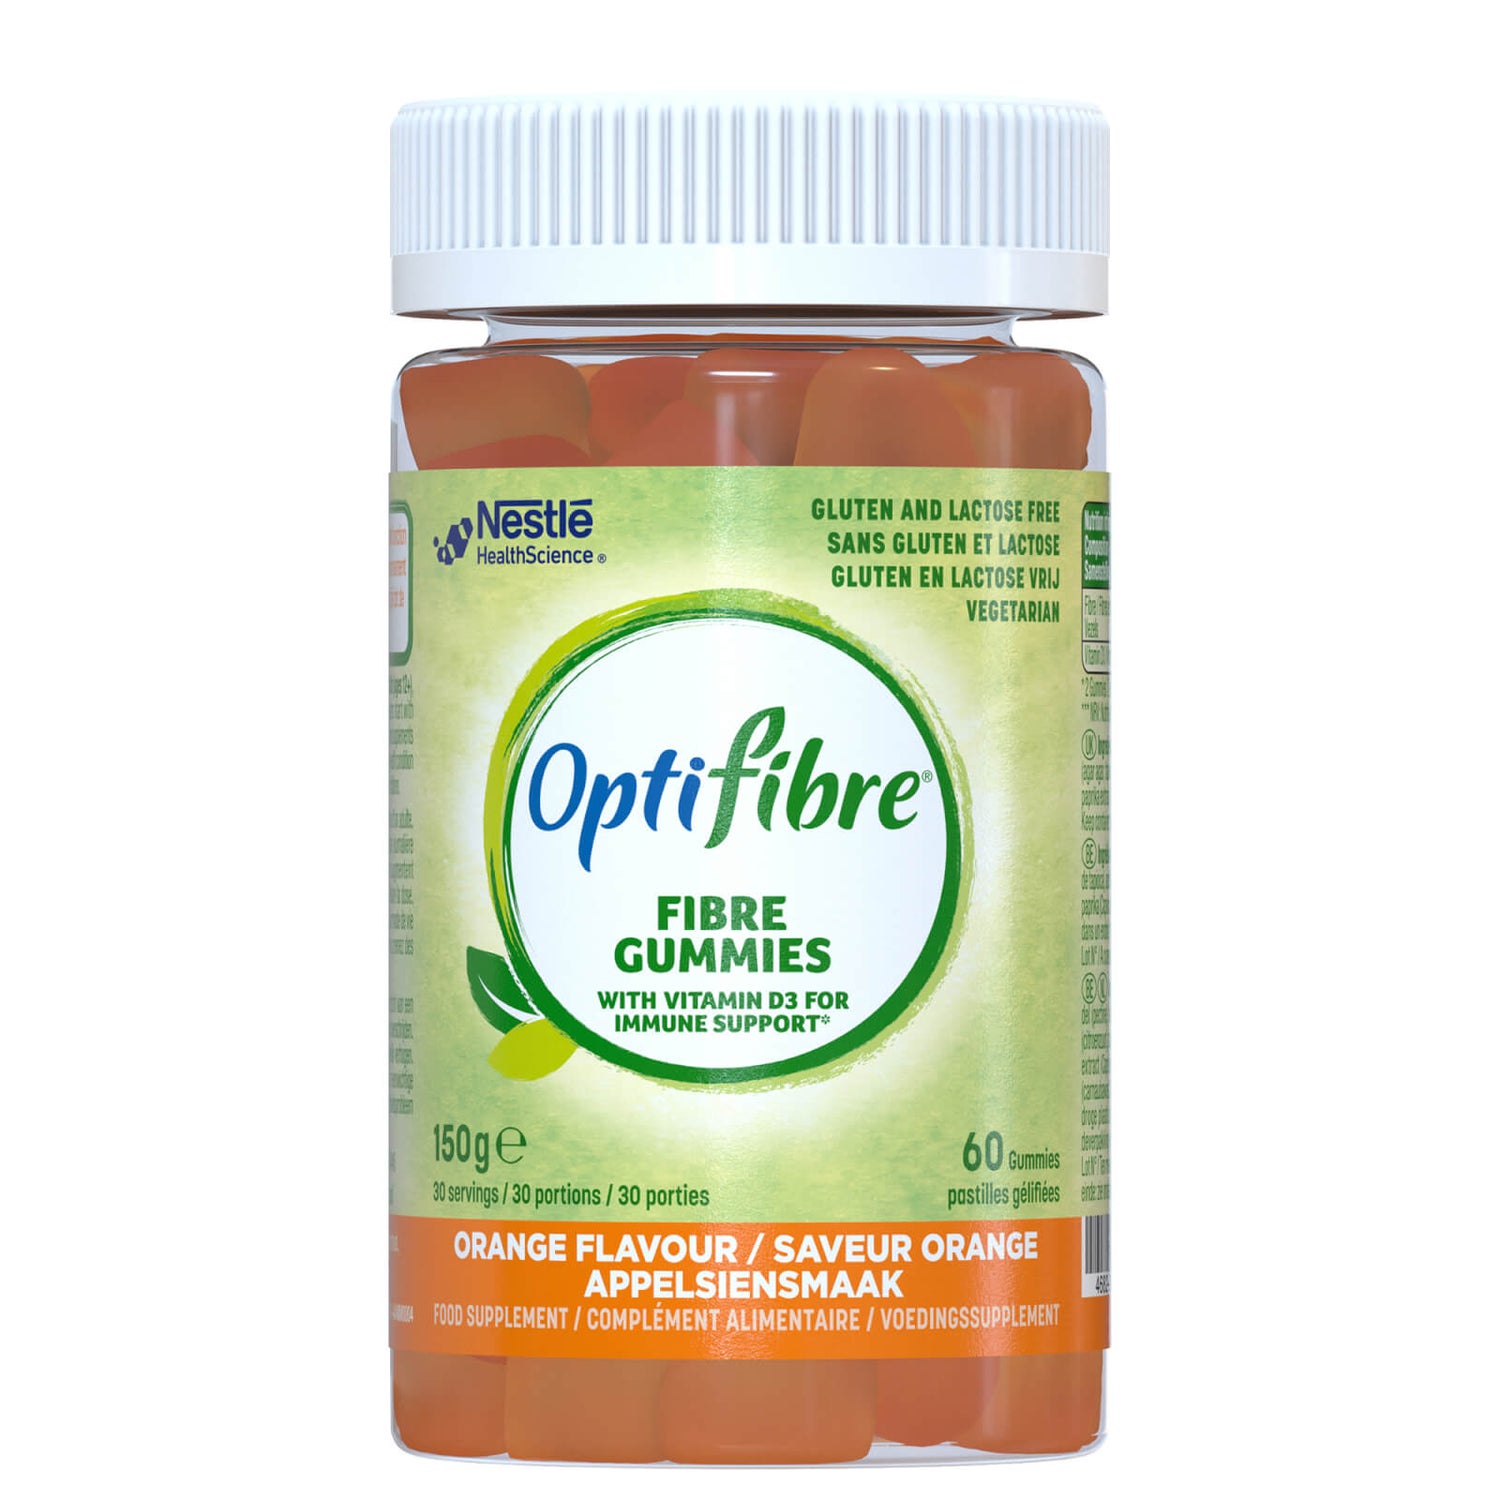 OptiFibre Gummies with Vitamin D3 - 60 Count